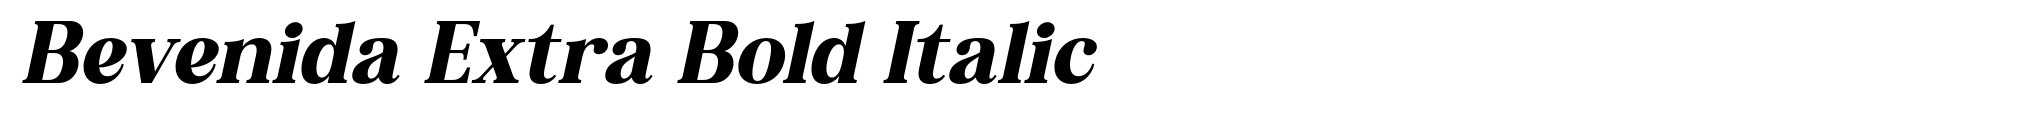 Bevenida Extra Bold Italic image